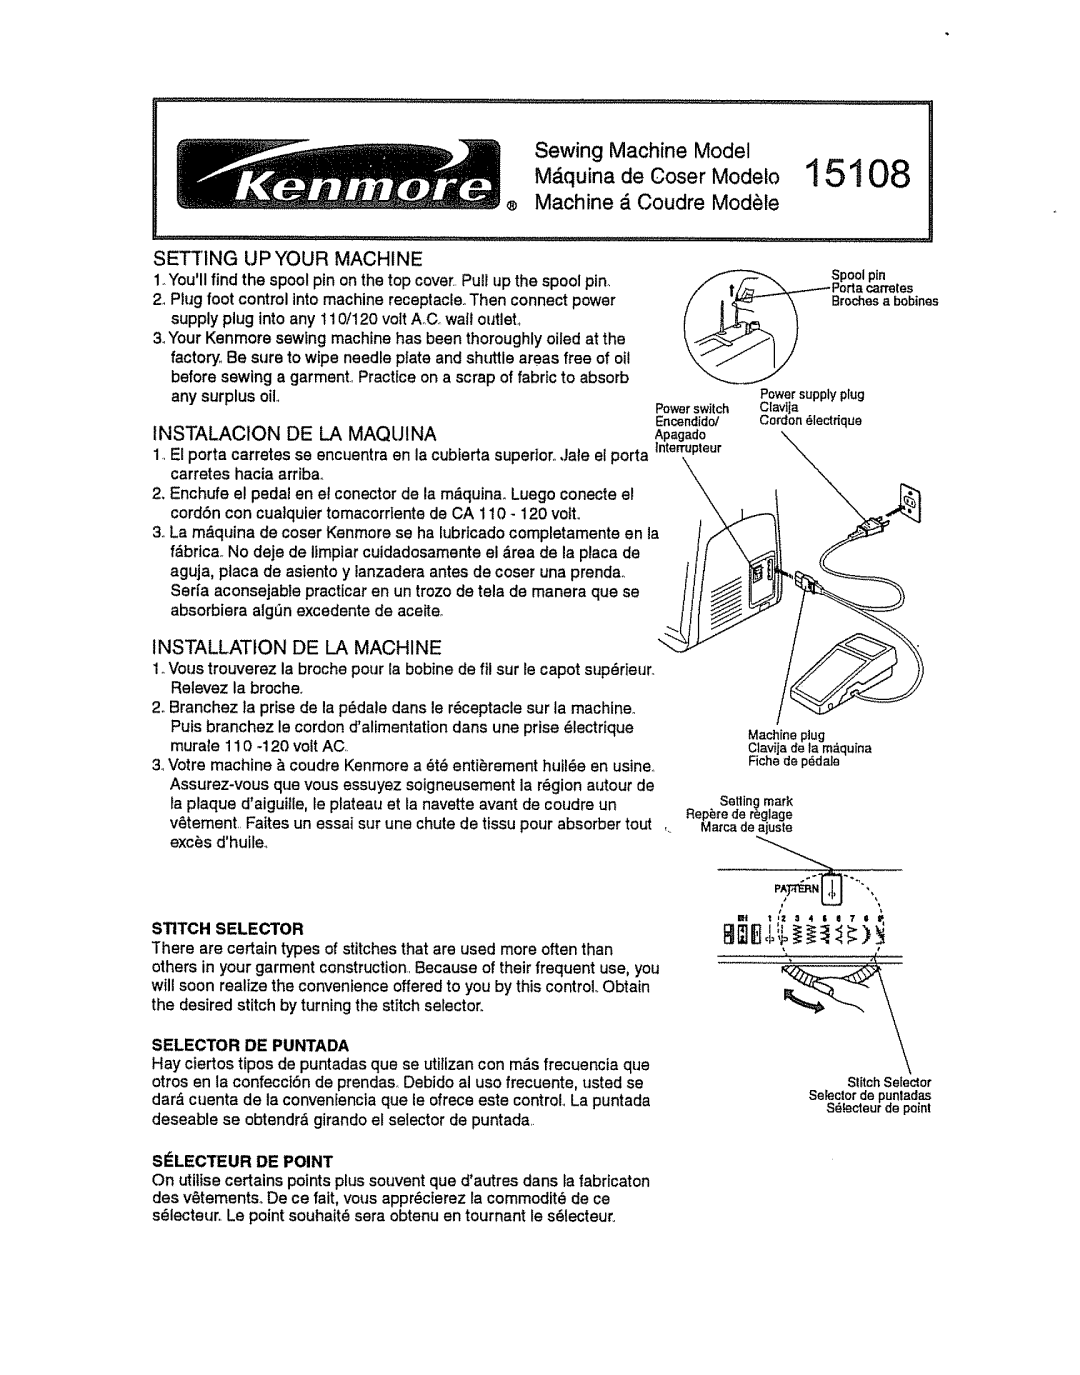 Kenmore 385.151082 owner manual Murale 110 -120 volt AC, Excs dhuileo, Deseable se obtendr girando el selector de puntada 